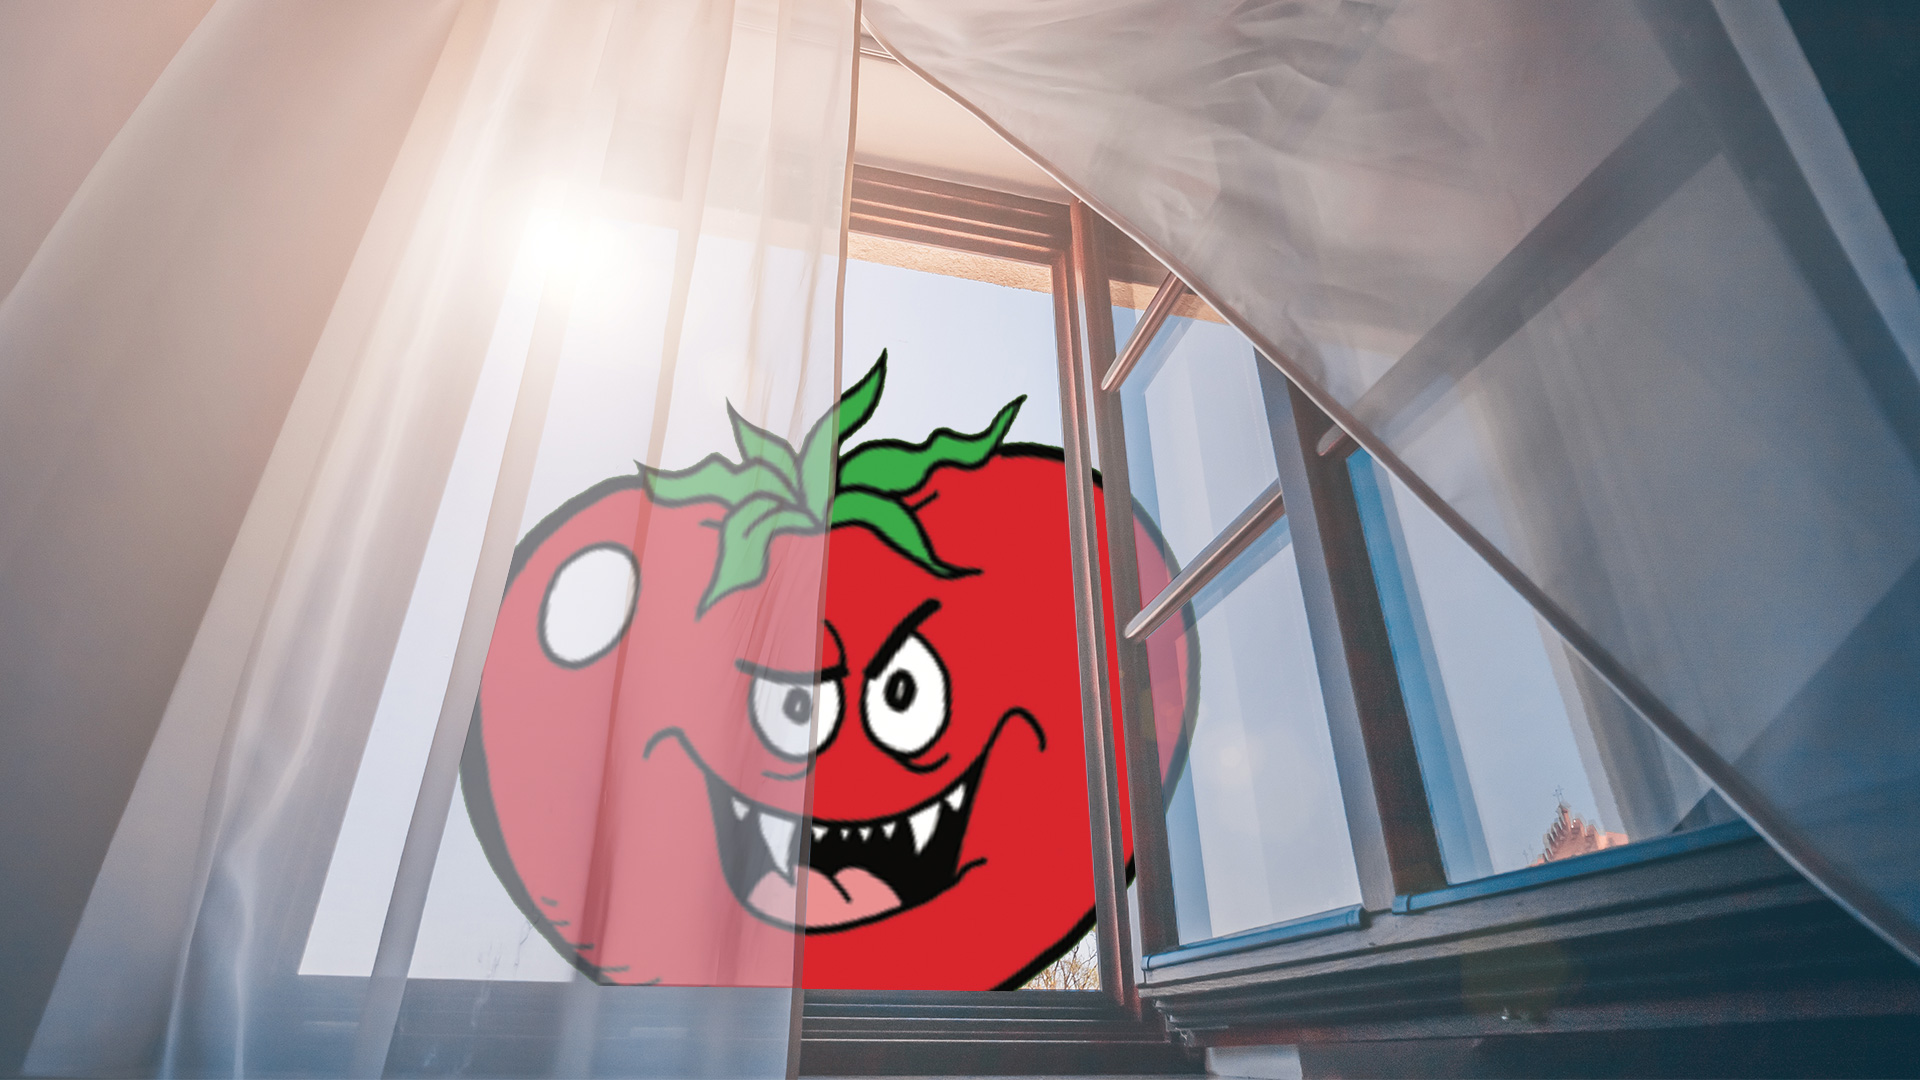 A giant tomato as seen through a bedroom window